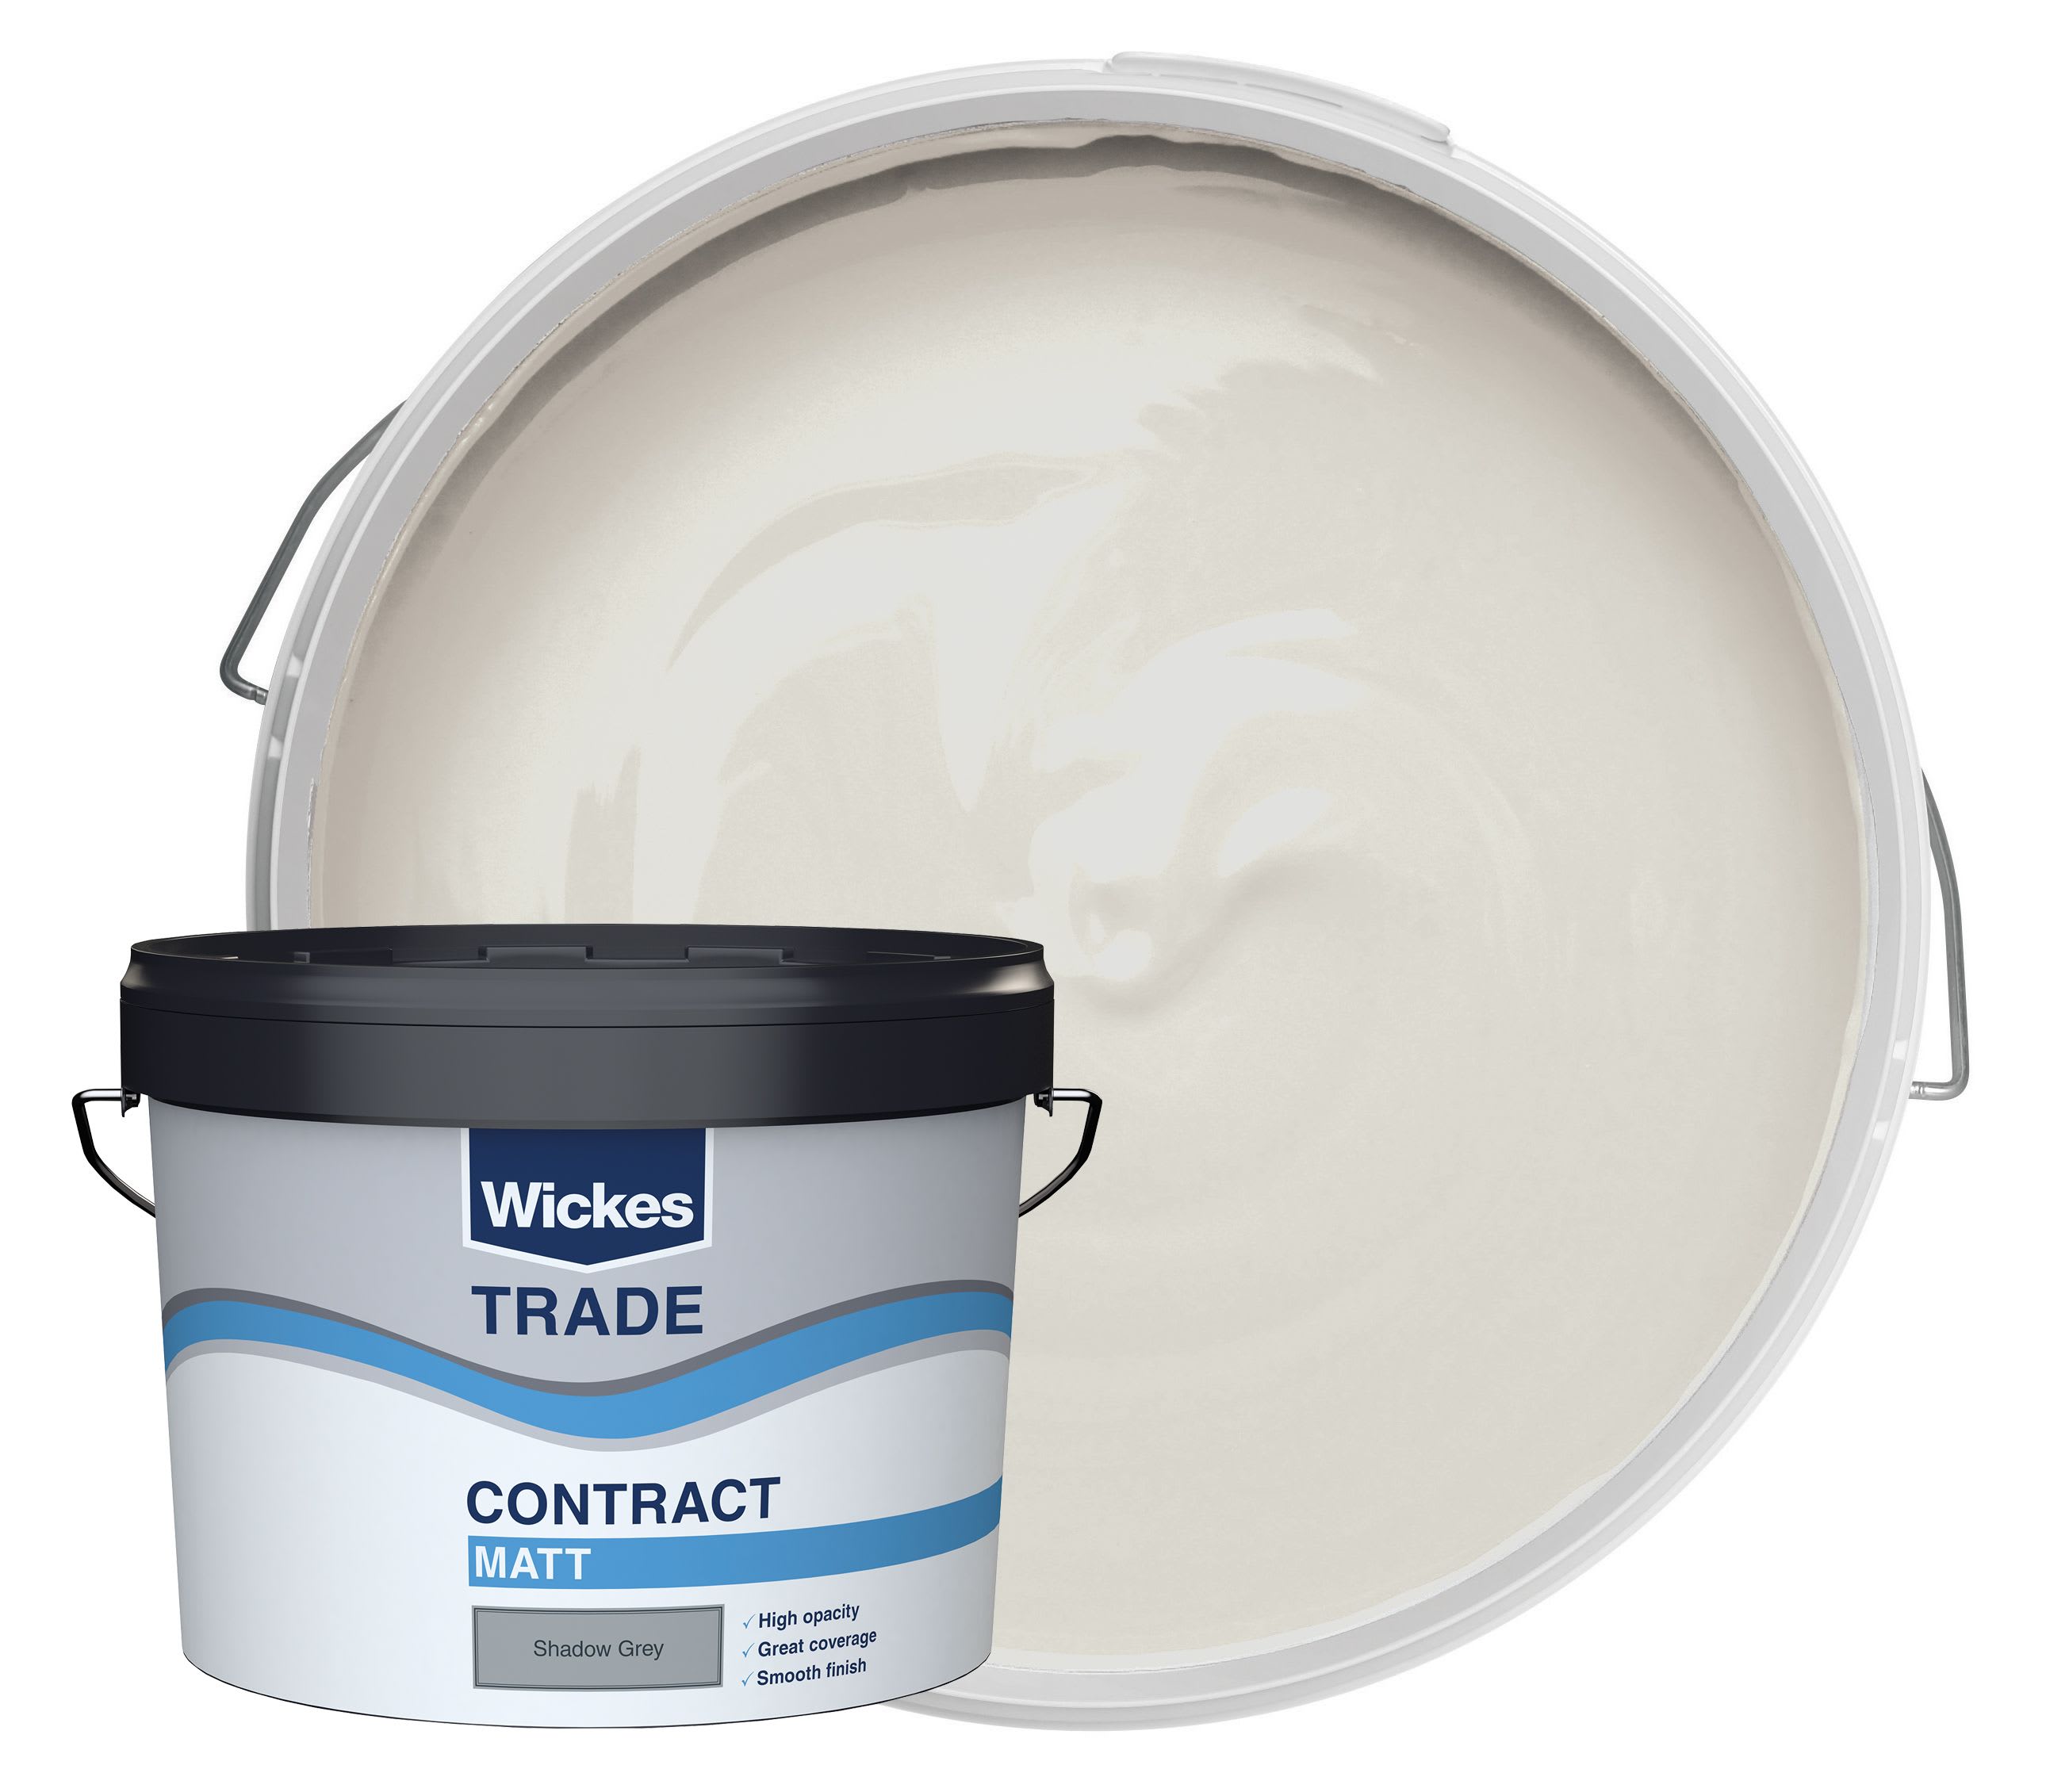 Wickes Trade Contract Matt Emulsion Paint - Shadow